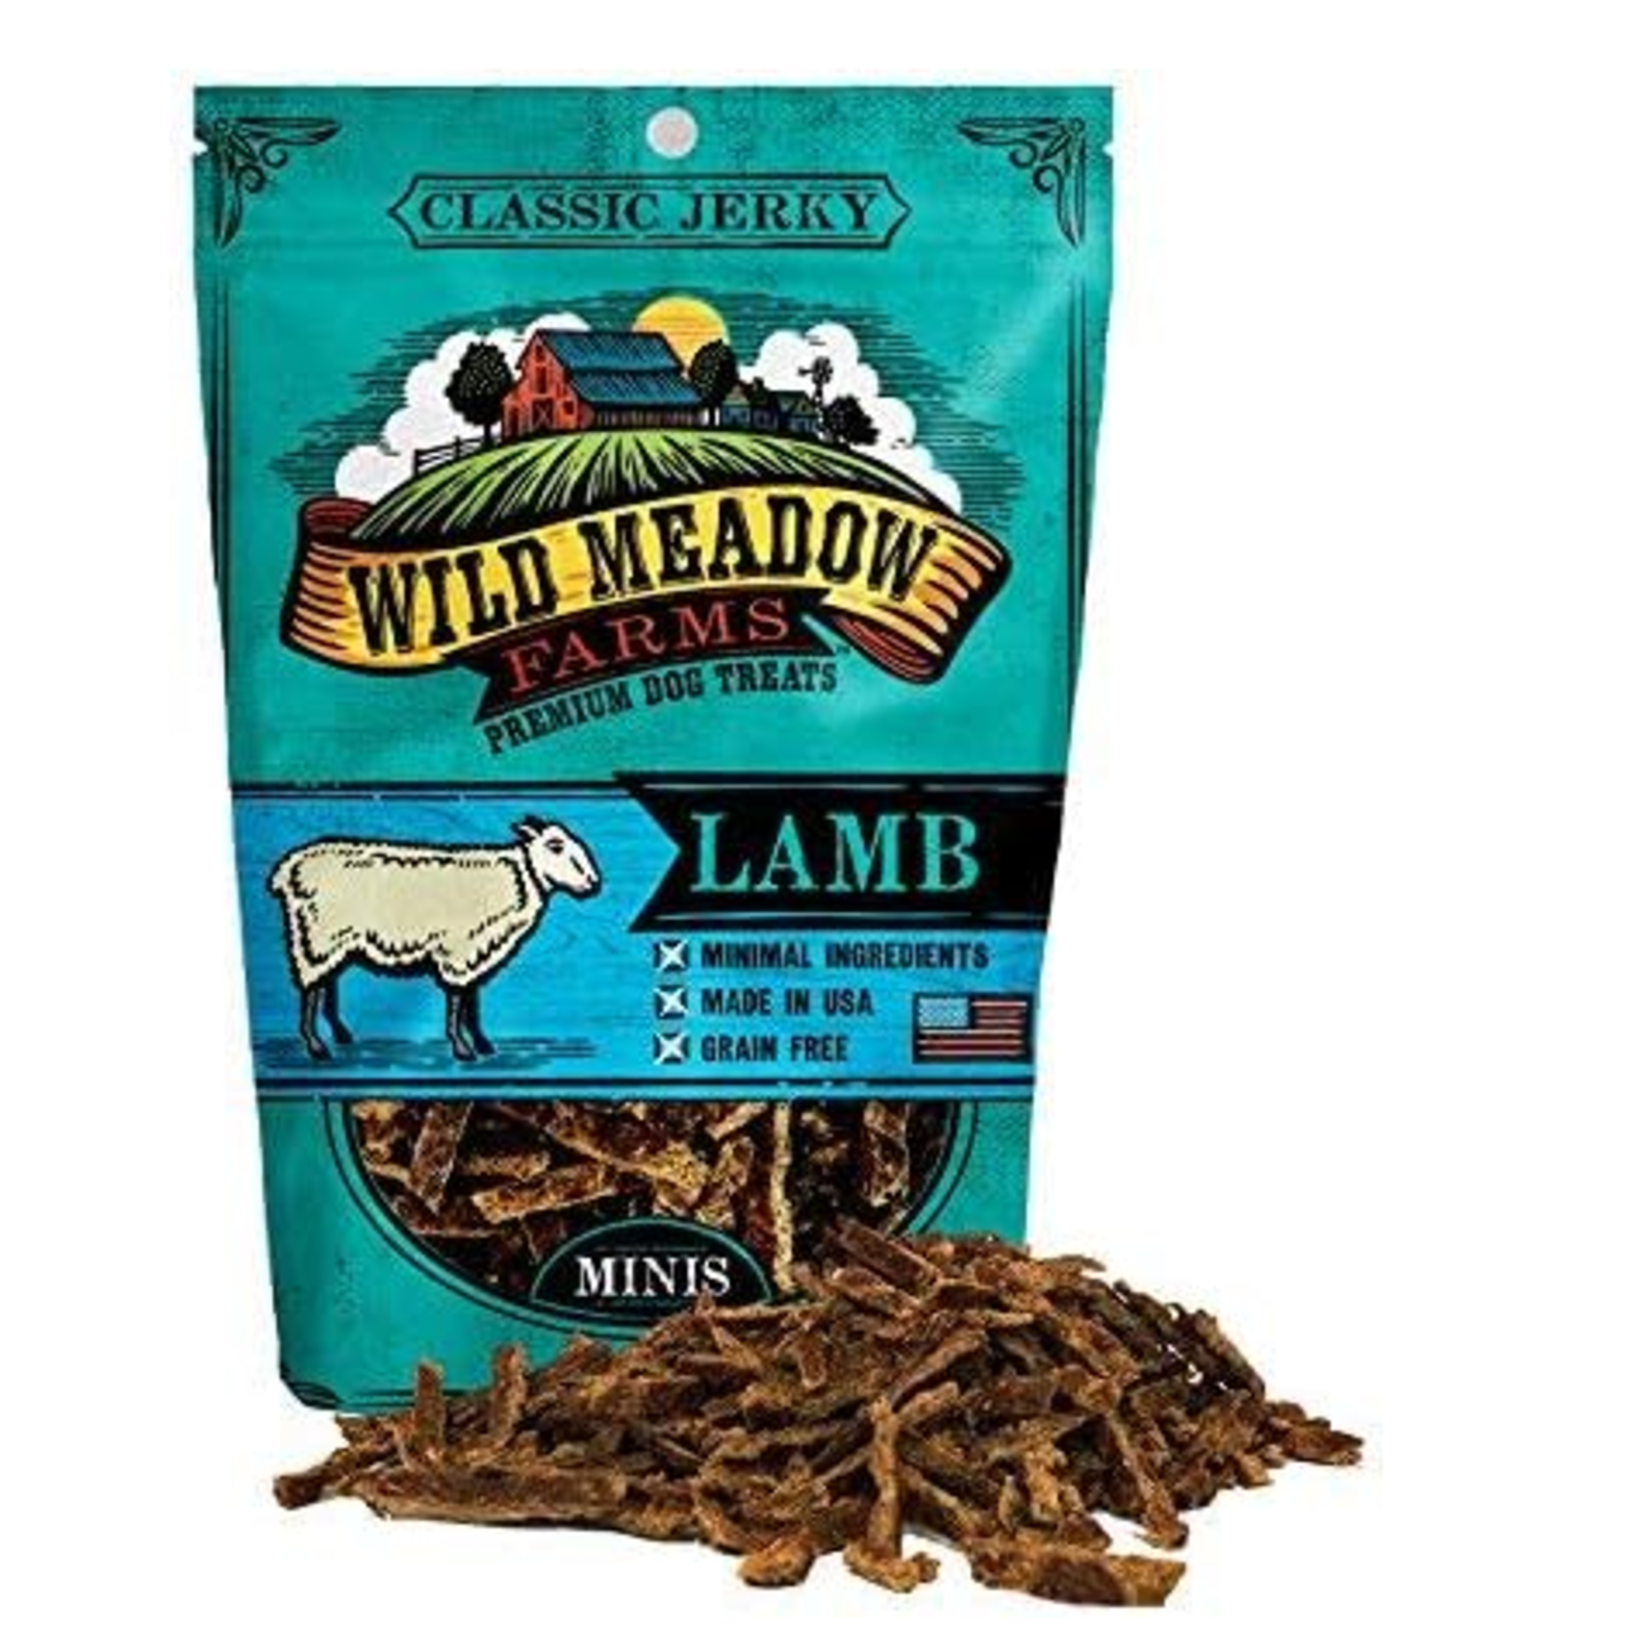 Wild Meadow Farms 3.5 oz. - Lamb - Classic Minis - Semi-Soft Dog Treat - Wild Meadow Farms